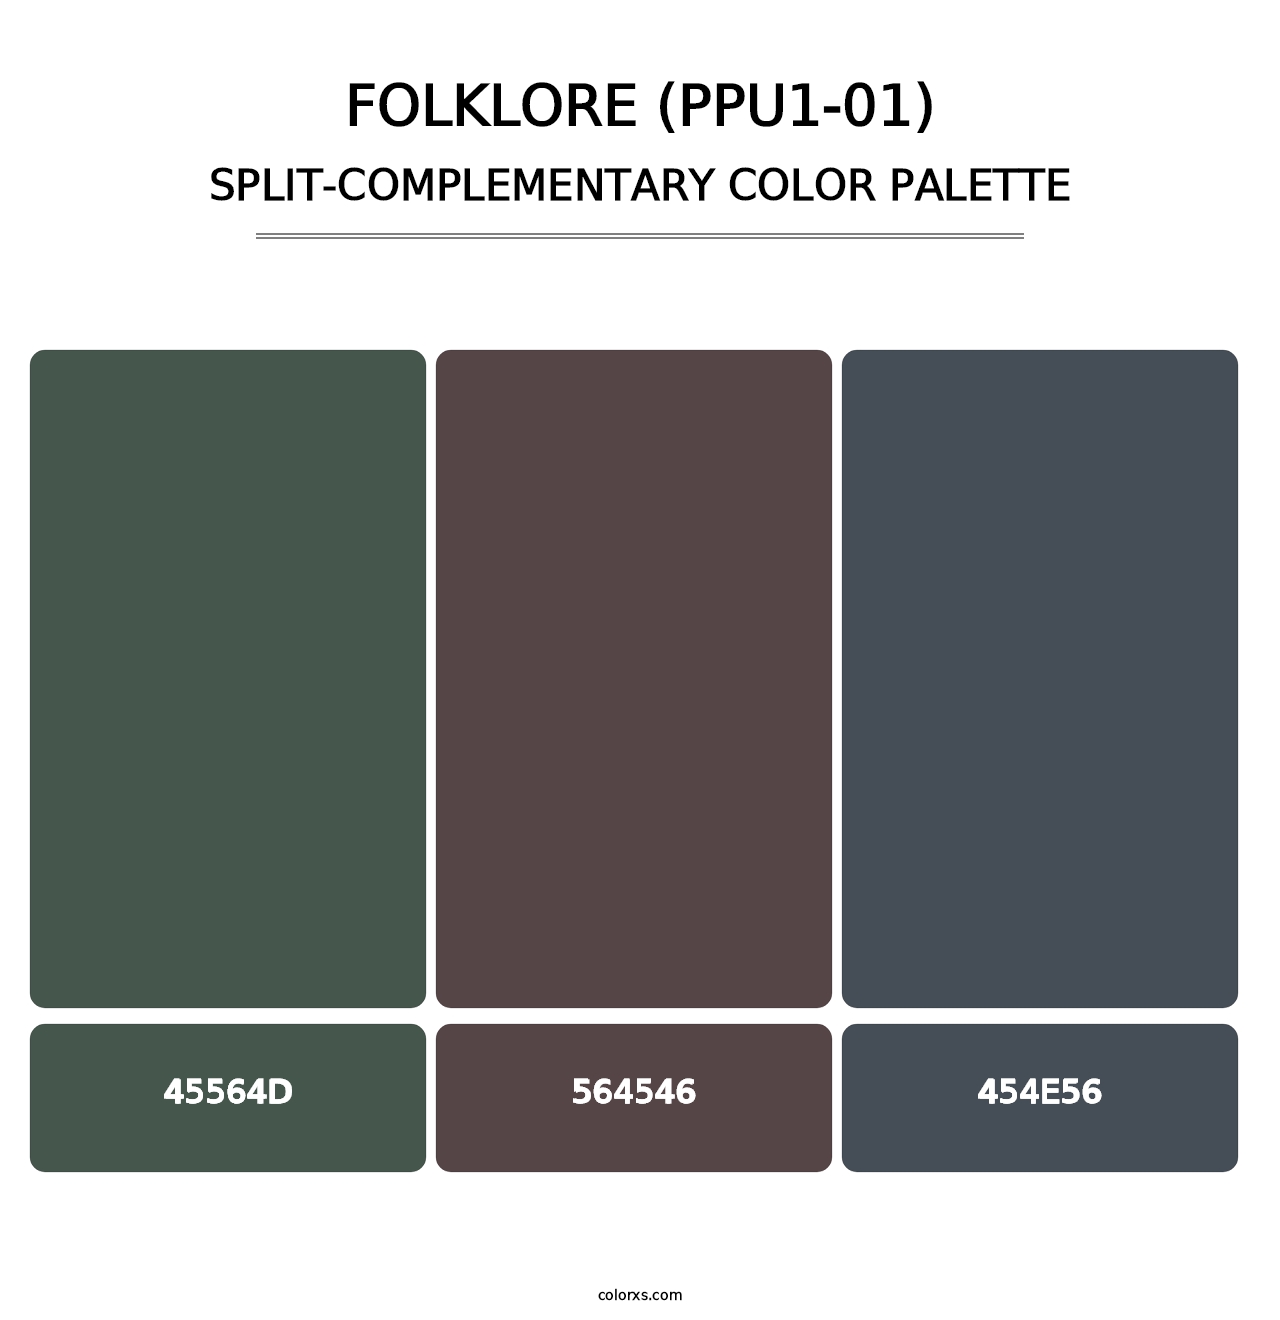 Folklore (PPU1-01) - Split-Complementary Color Palette